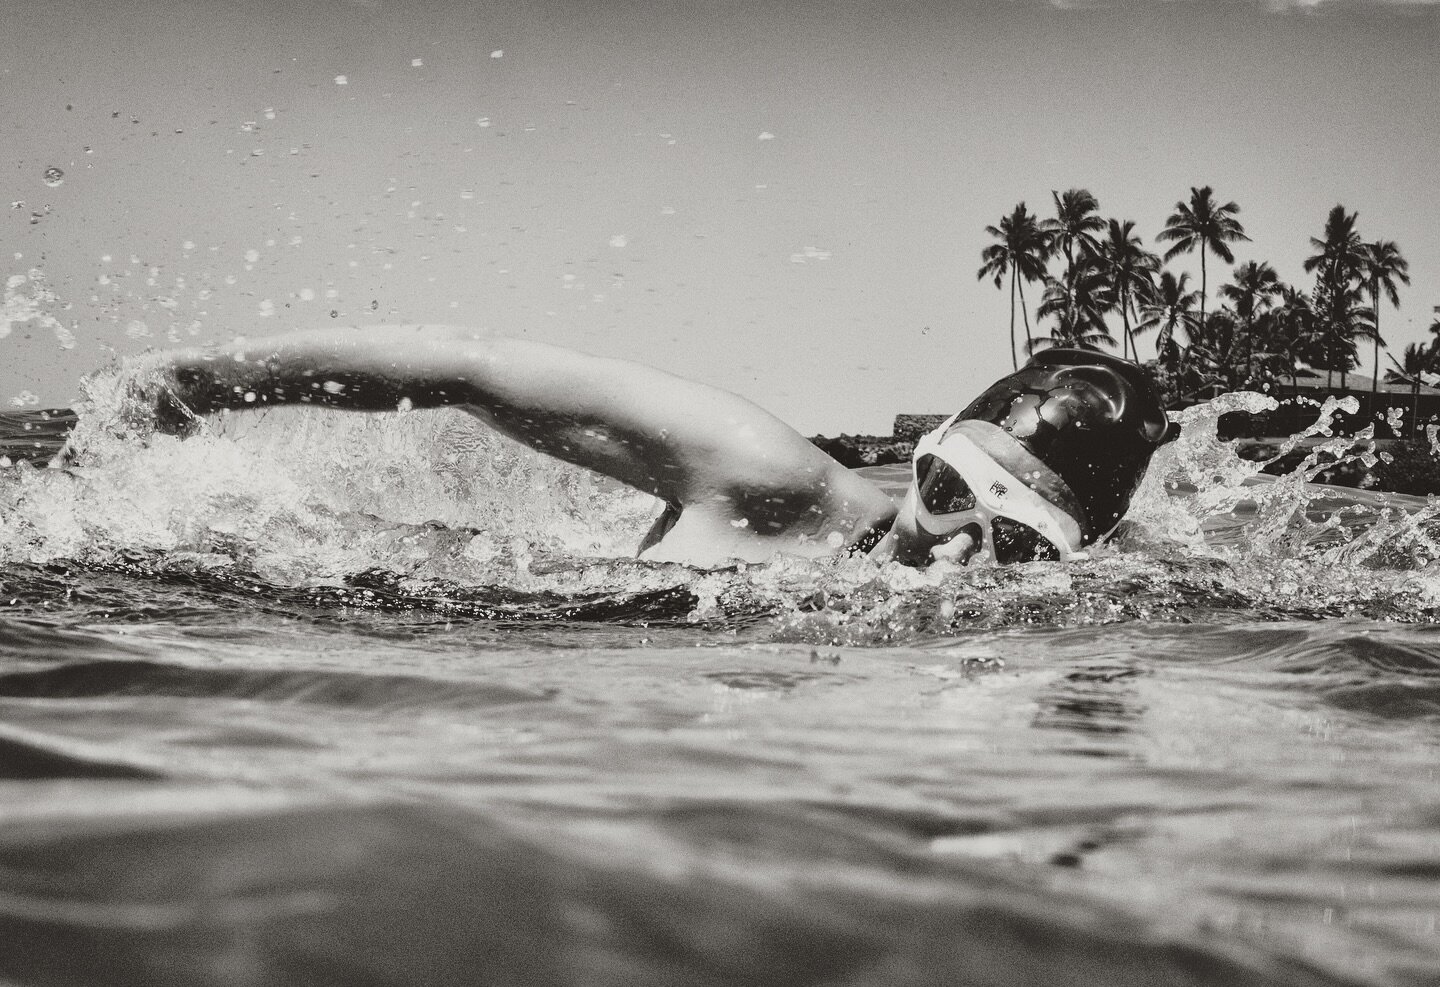 Grace + power @beyondtheblackline_ 

📷 Jeff Hornbaker @jeffthirdeye 

🥽 The Mystic in white

#swimmer #swimming #openocean #openoceanswimming #swimgoggles #watersports #athlete #womanathlete #hawaii #womeninsport #power #determination #focus #eyepr